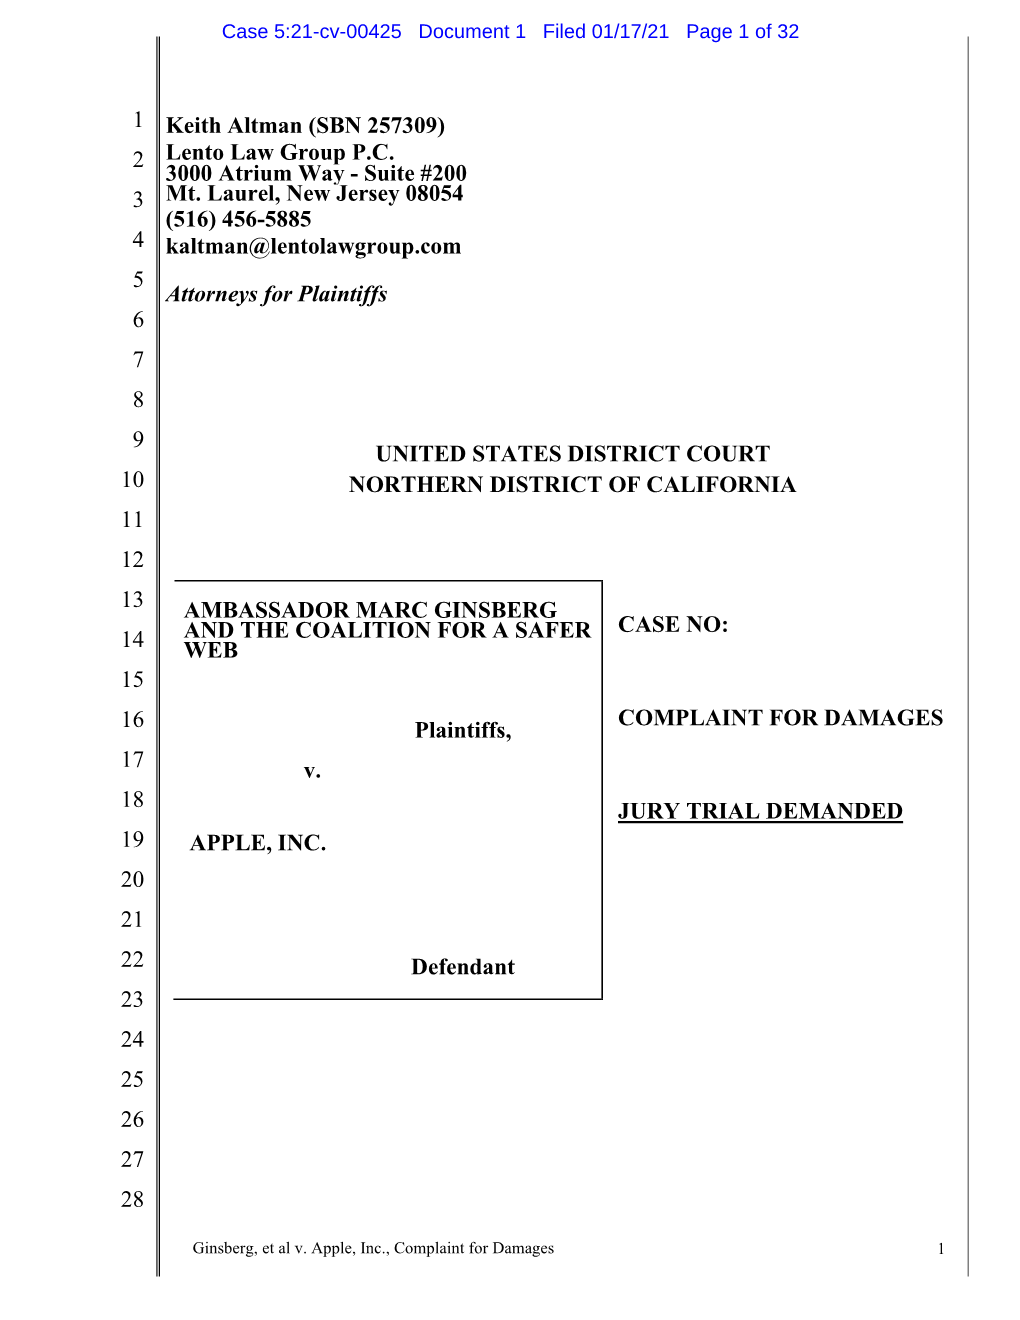 Lawsuit Seeking Damages and Injunctive Relief Against 6 Defendant Apple, Inc